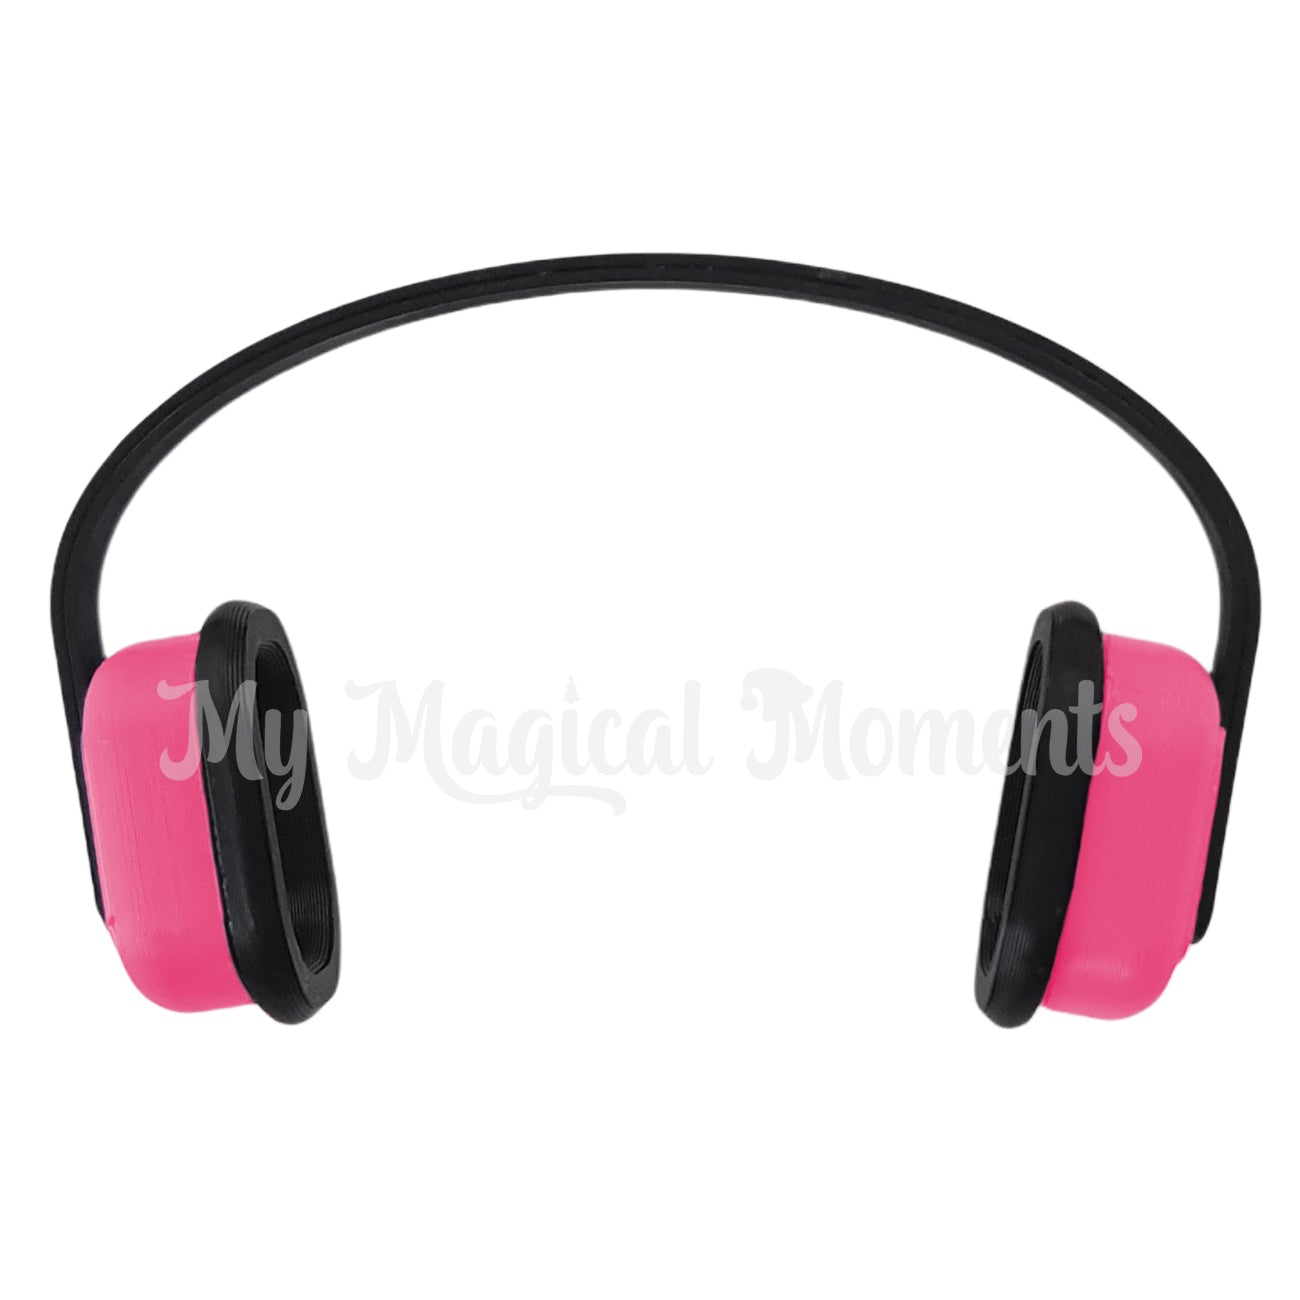 Elf Sized sensory headphones - Pink